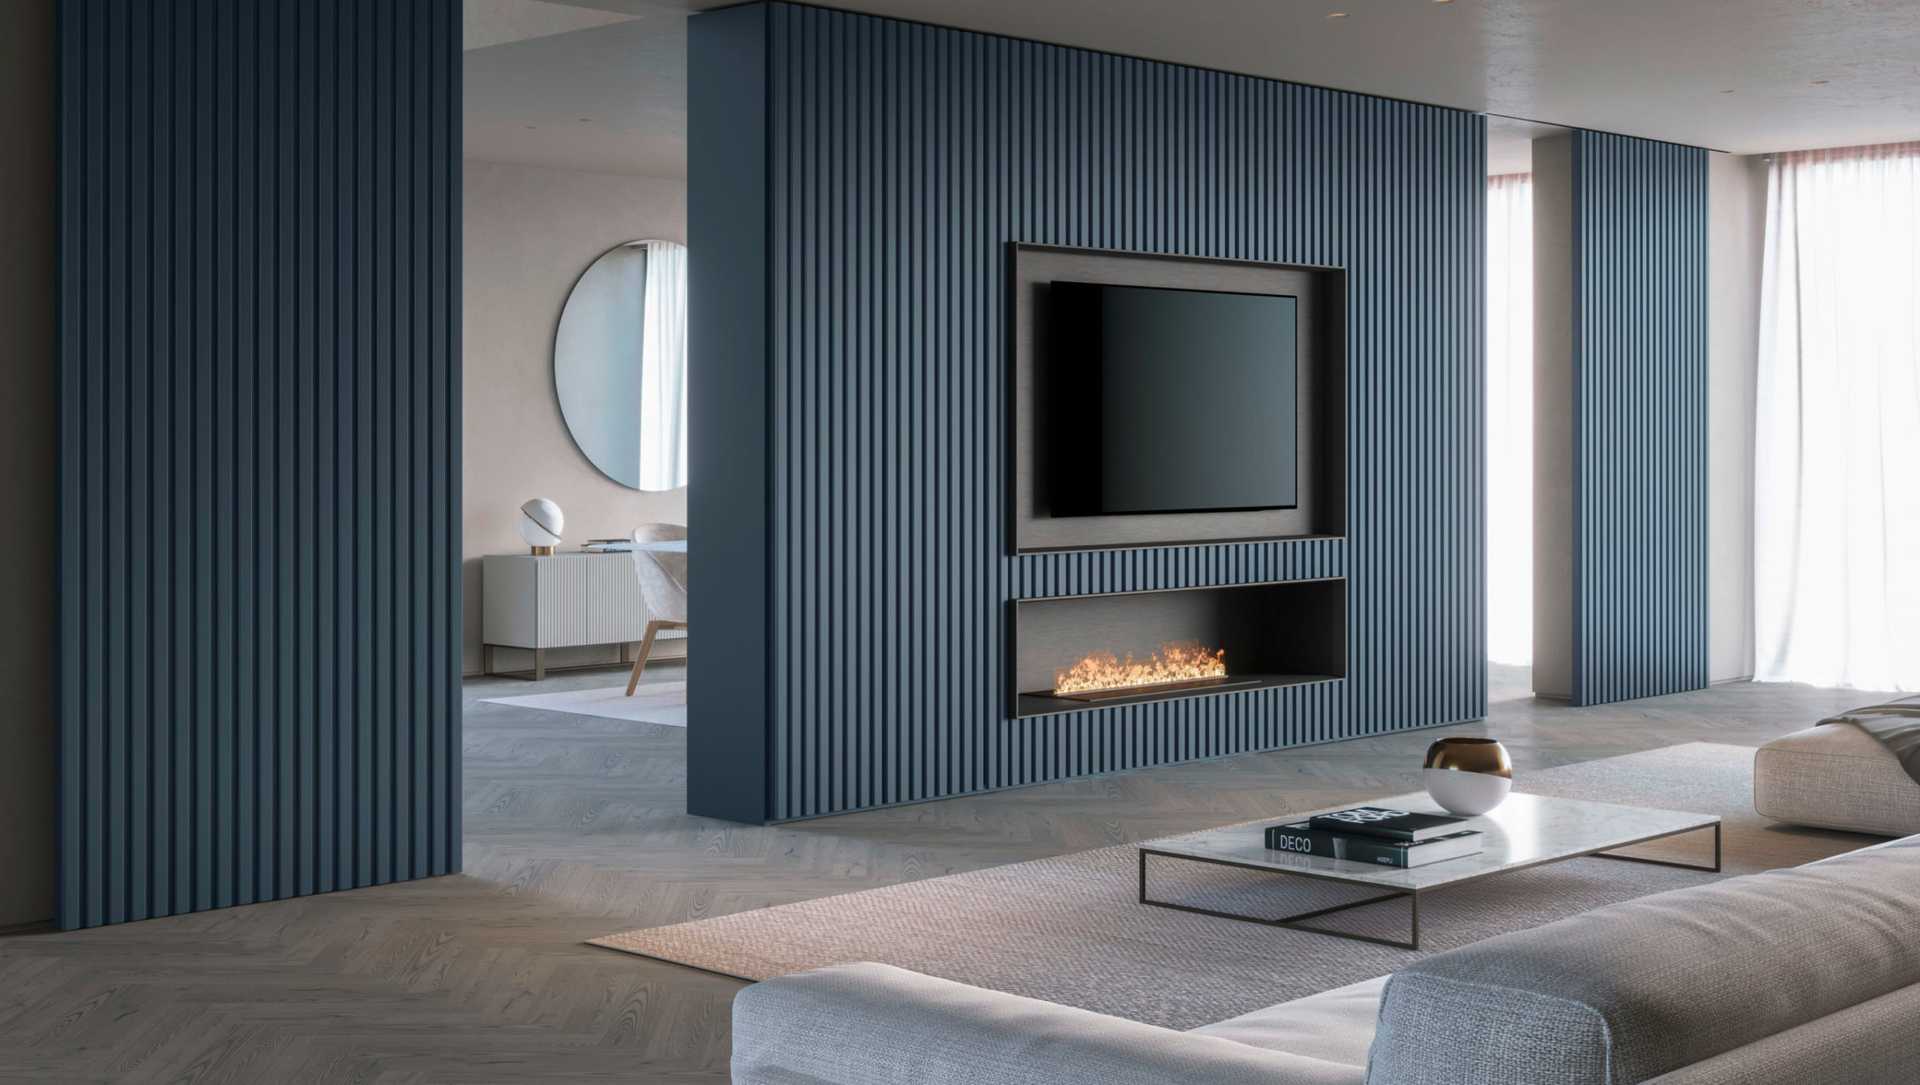 NOLI Modern Italian Living - Room Design with slate blue finish